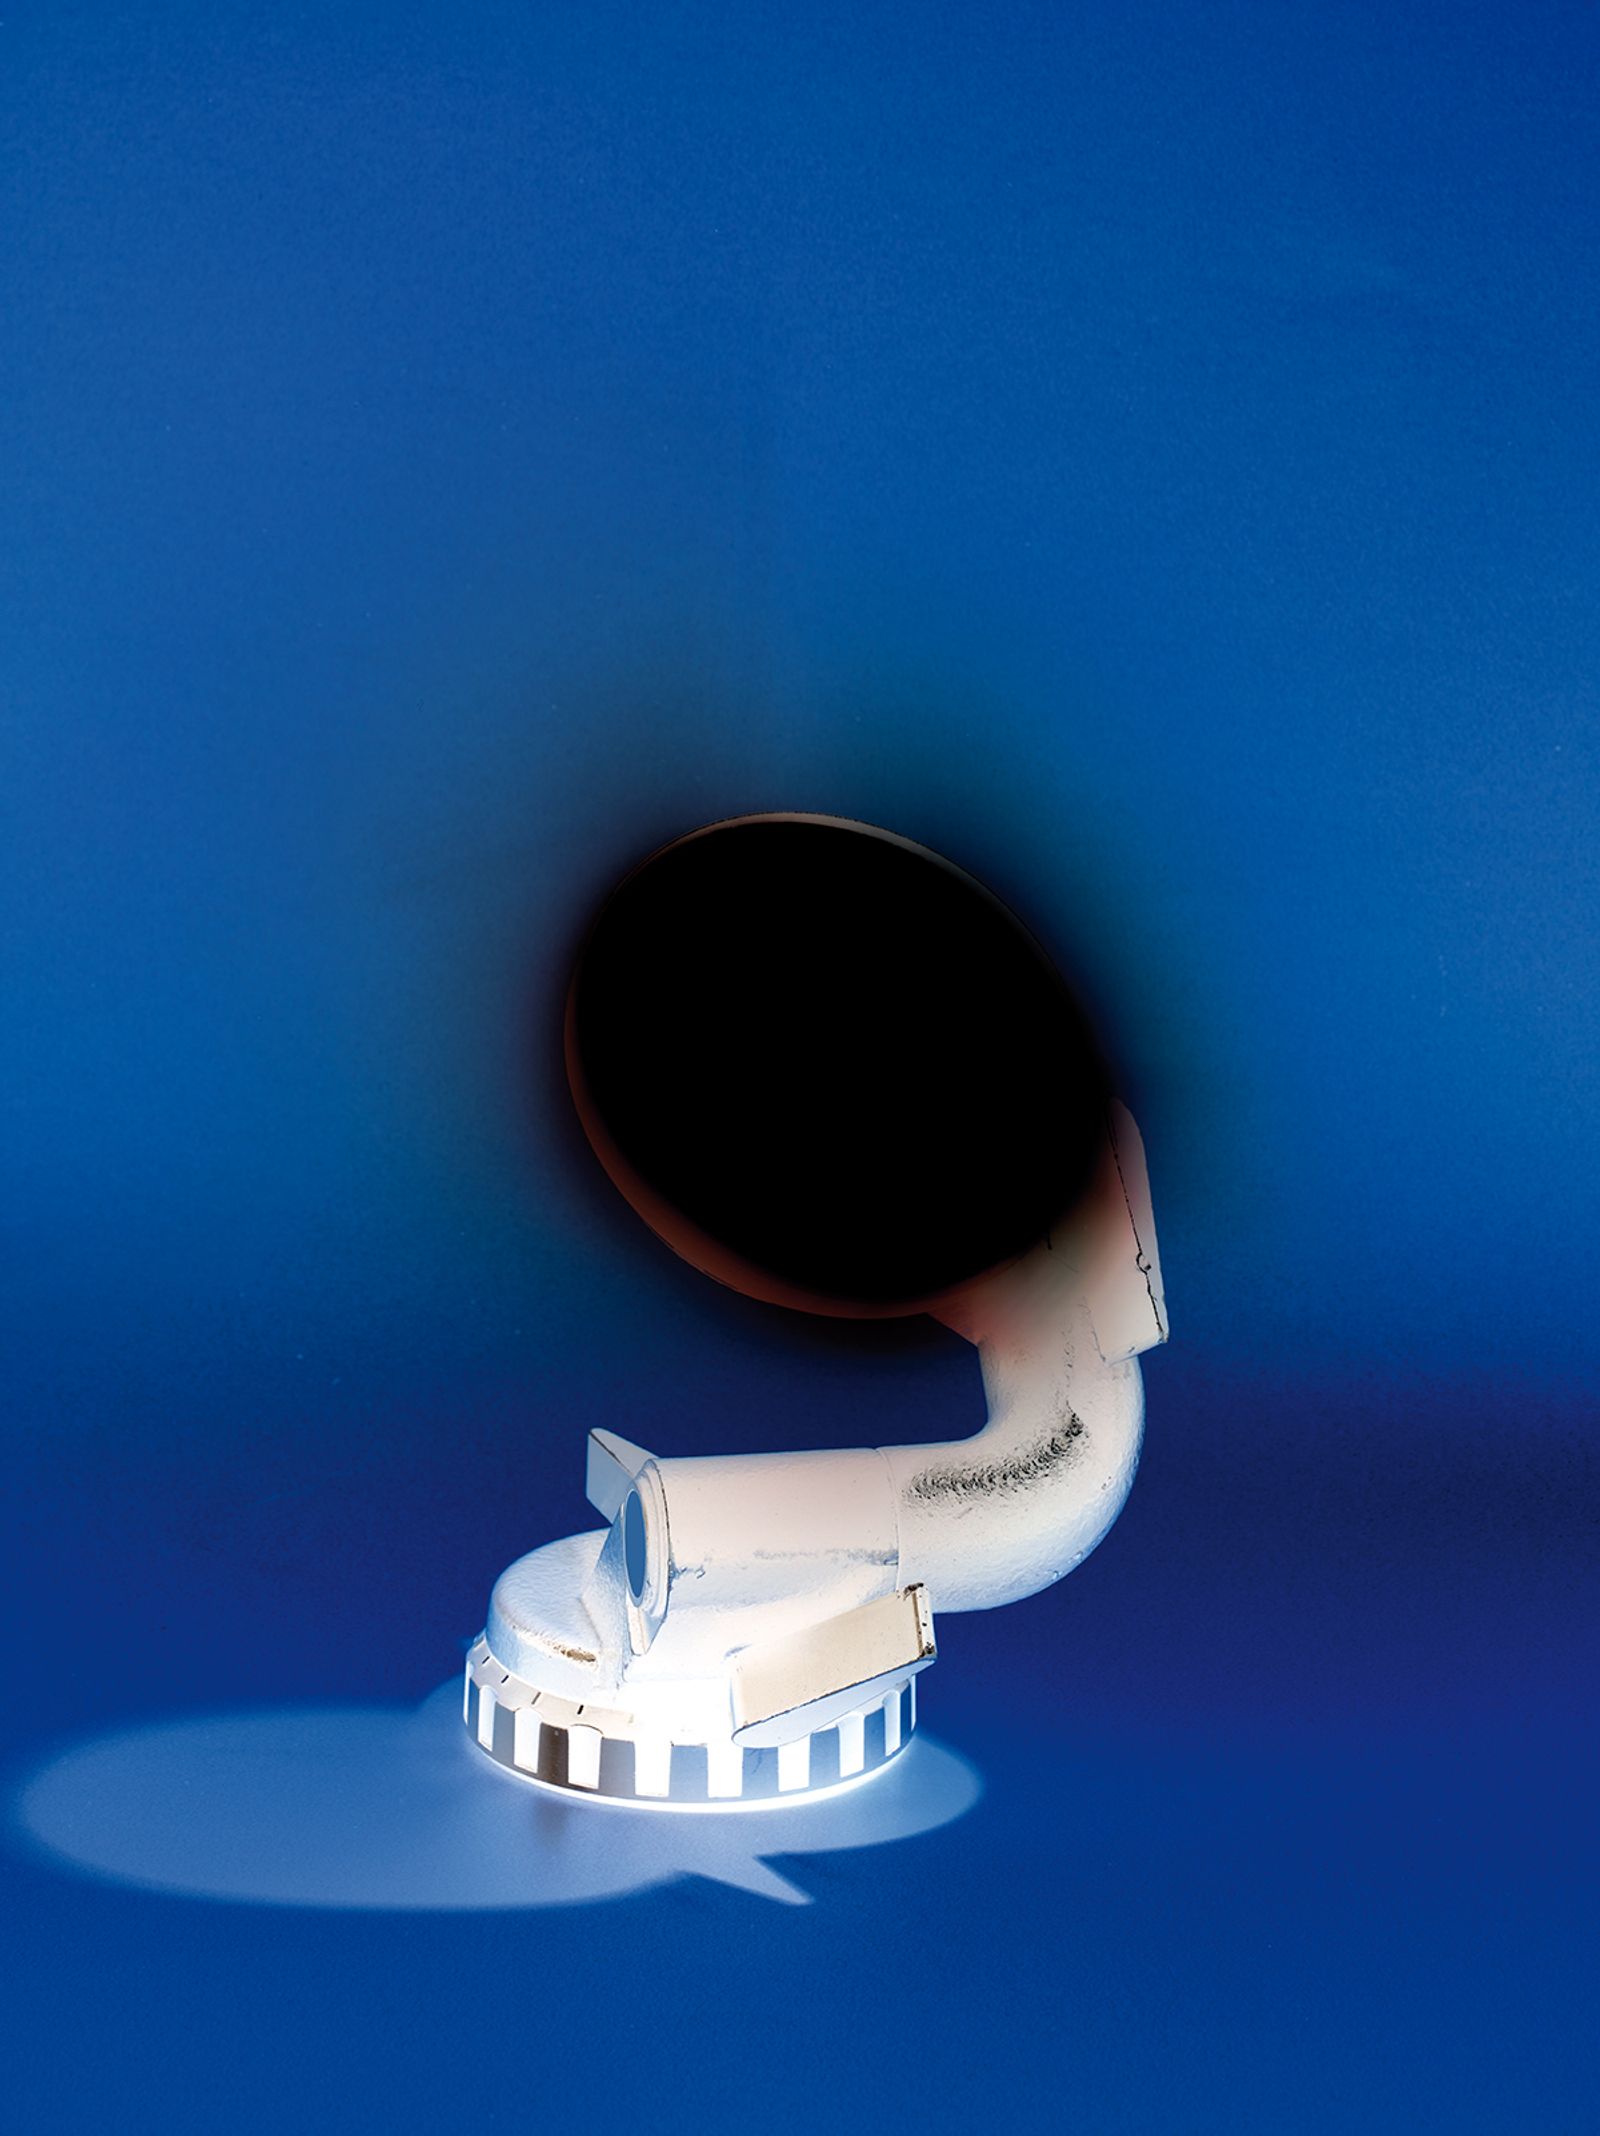 © Jens Masmann - Technical construction of a black hole